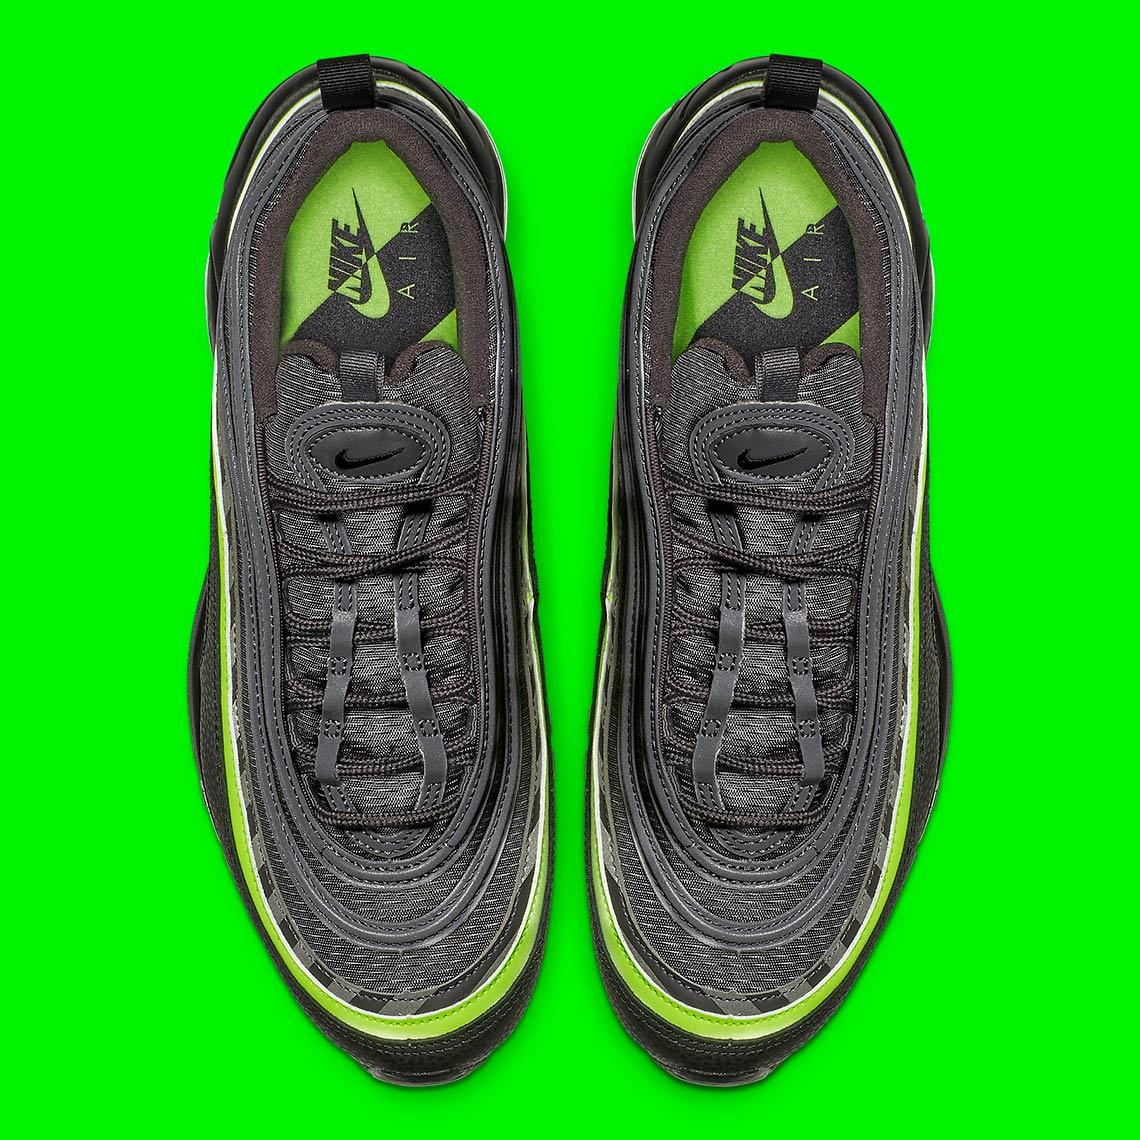 Diagonal Check with Nike Logo - Looking Good in Green: Nike Air Max 97 